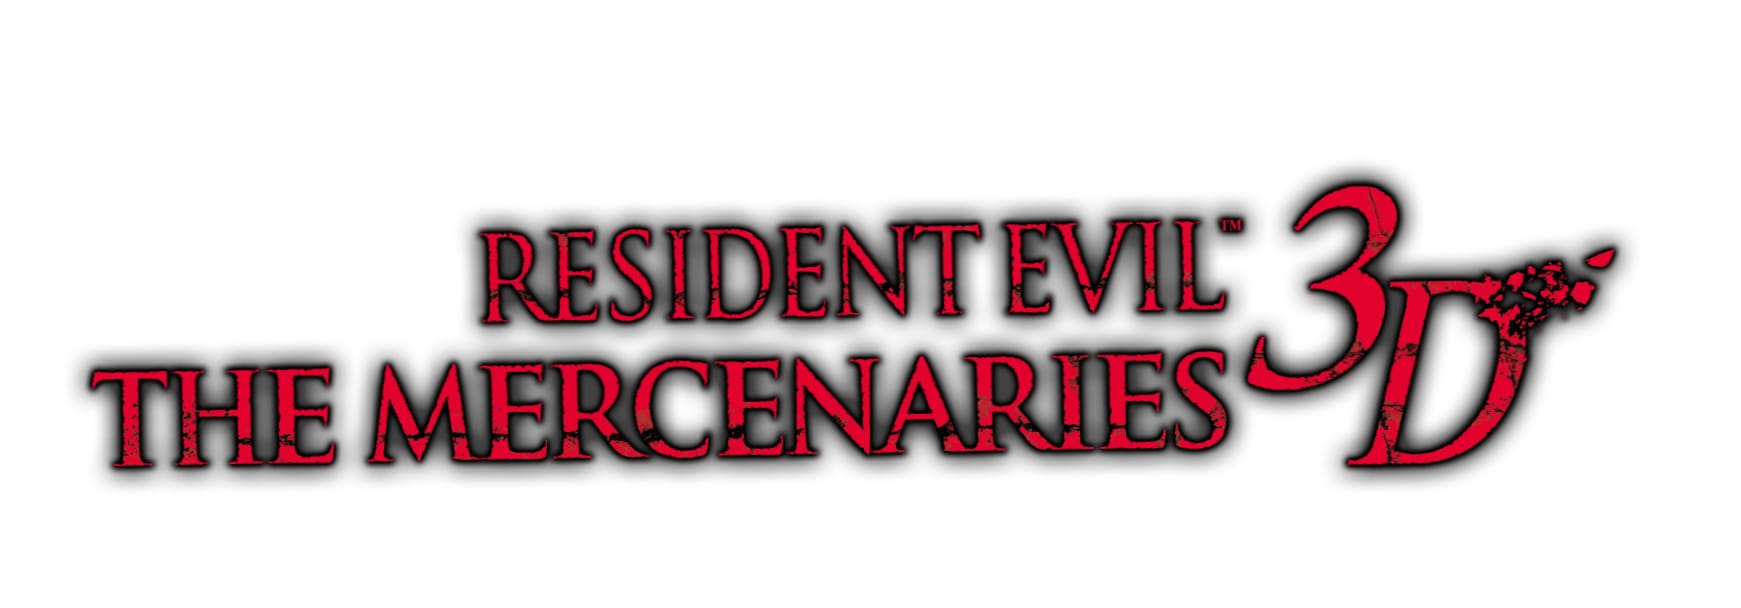 Resident Evil The Mercenaries 3D at 2048 x 2048 iPad size wallpapers HD quality